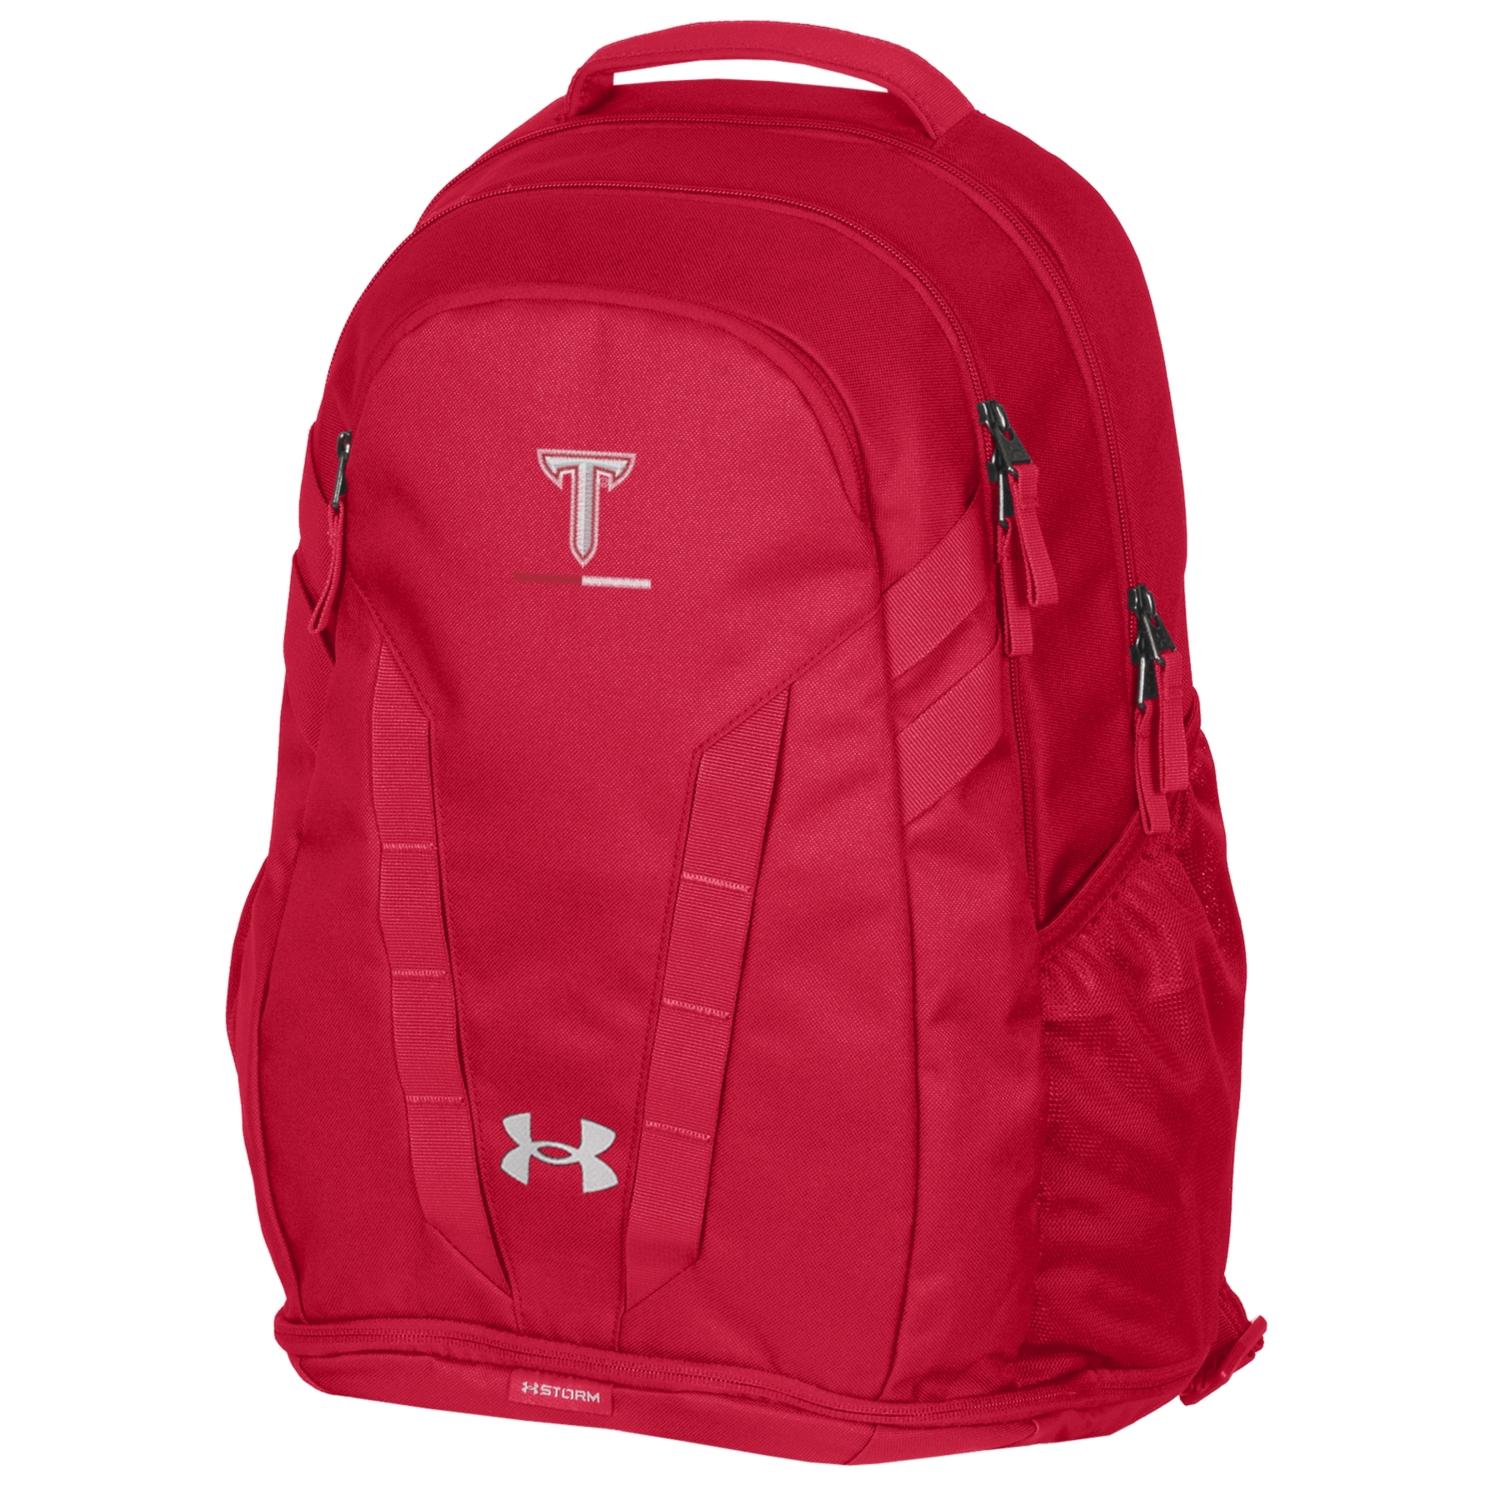 Troy University Trojans Hustle 5.0 Backpack red